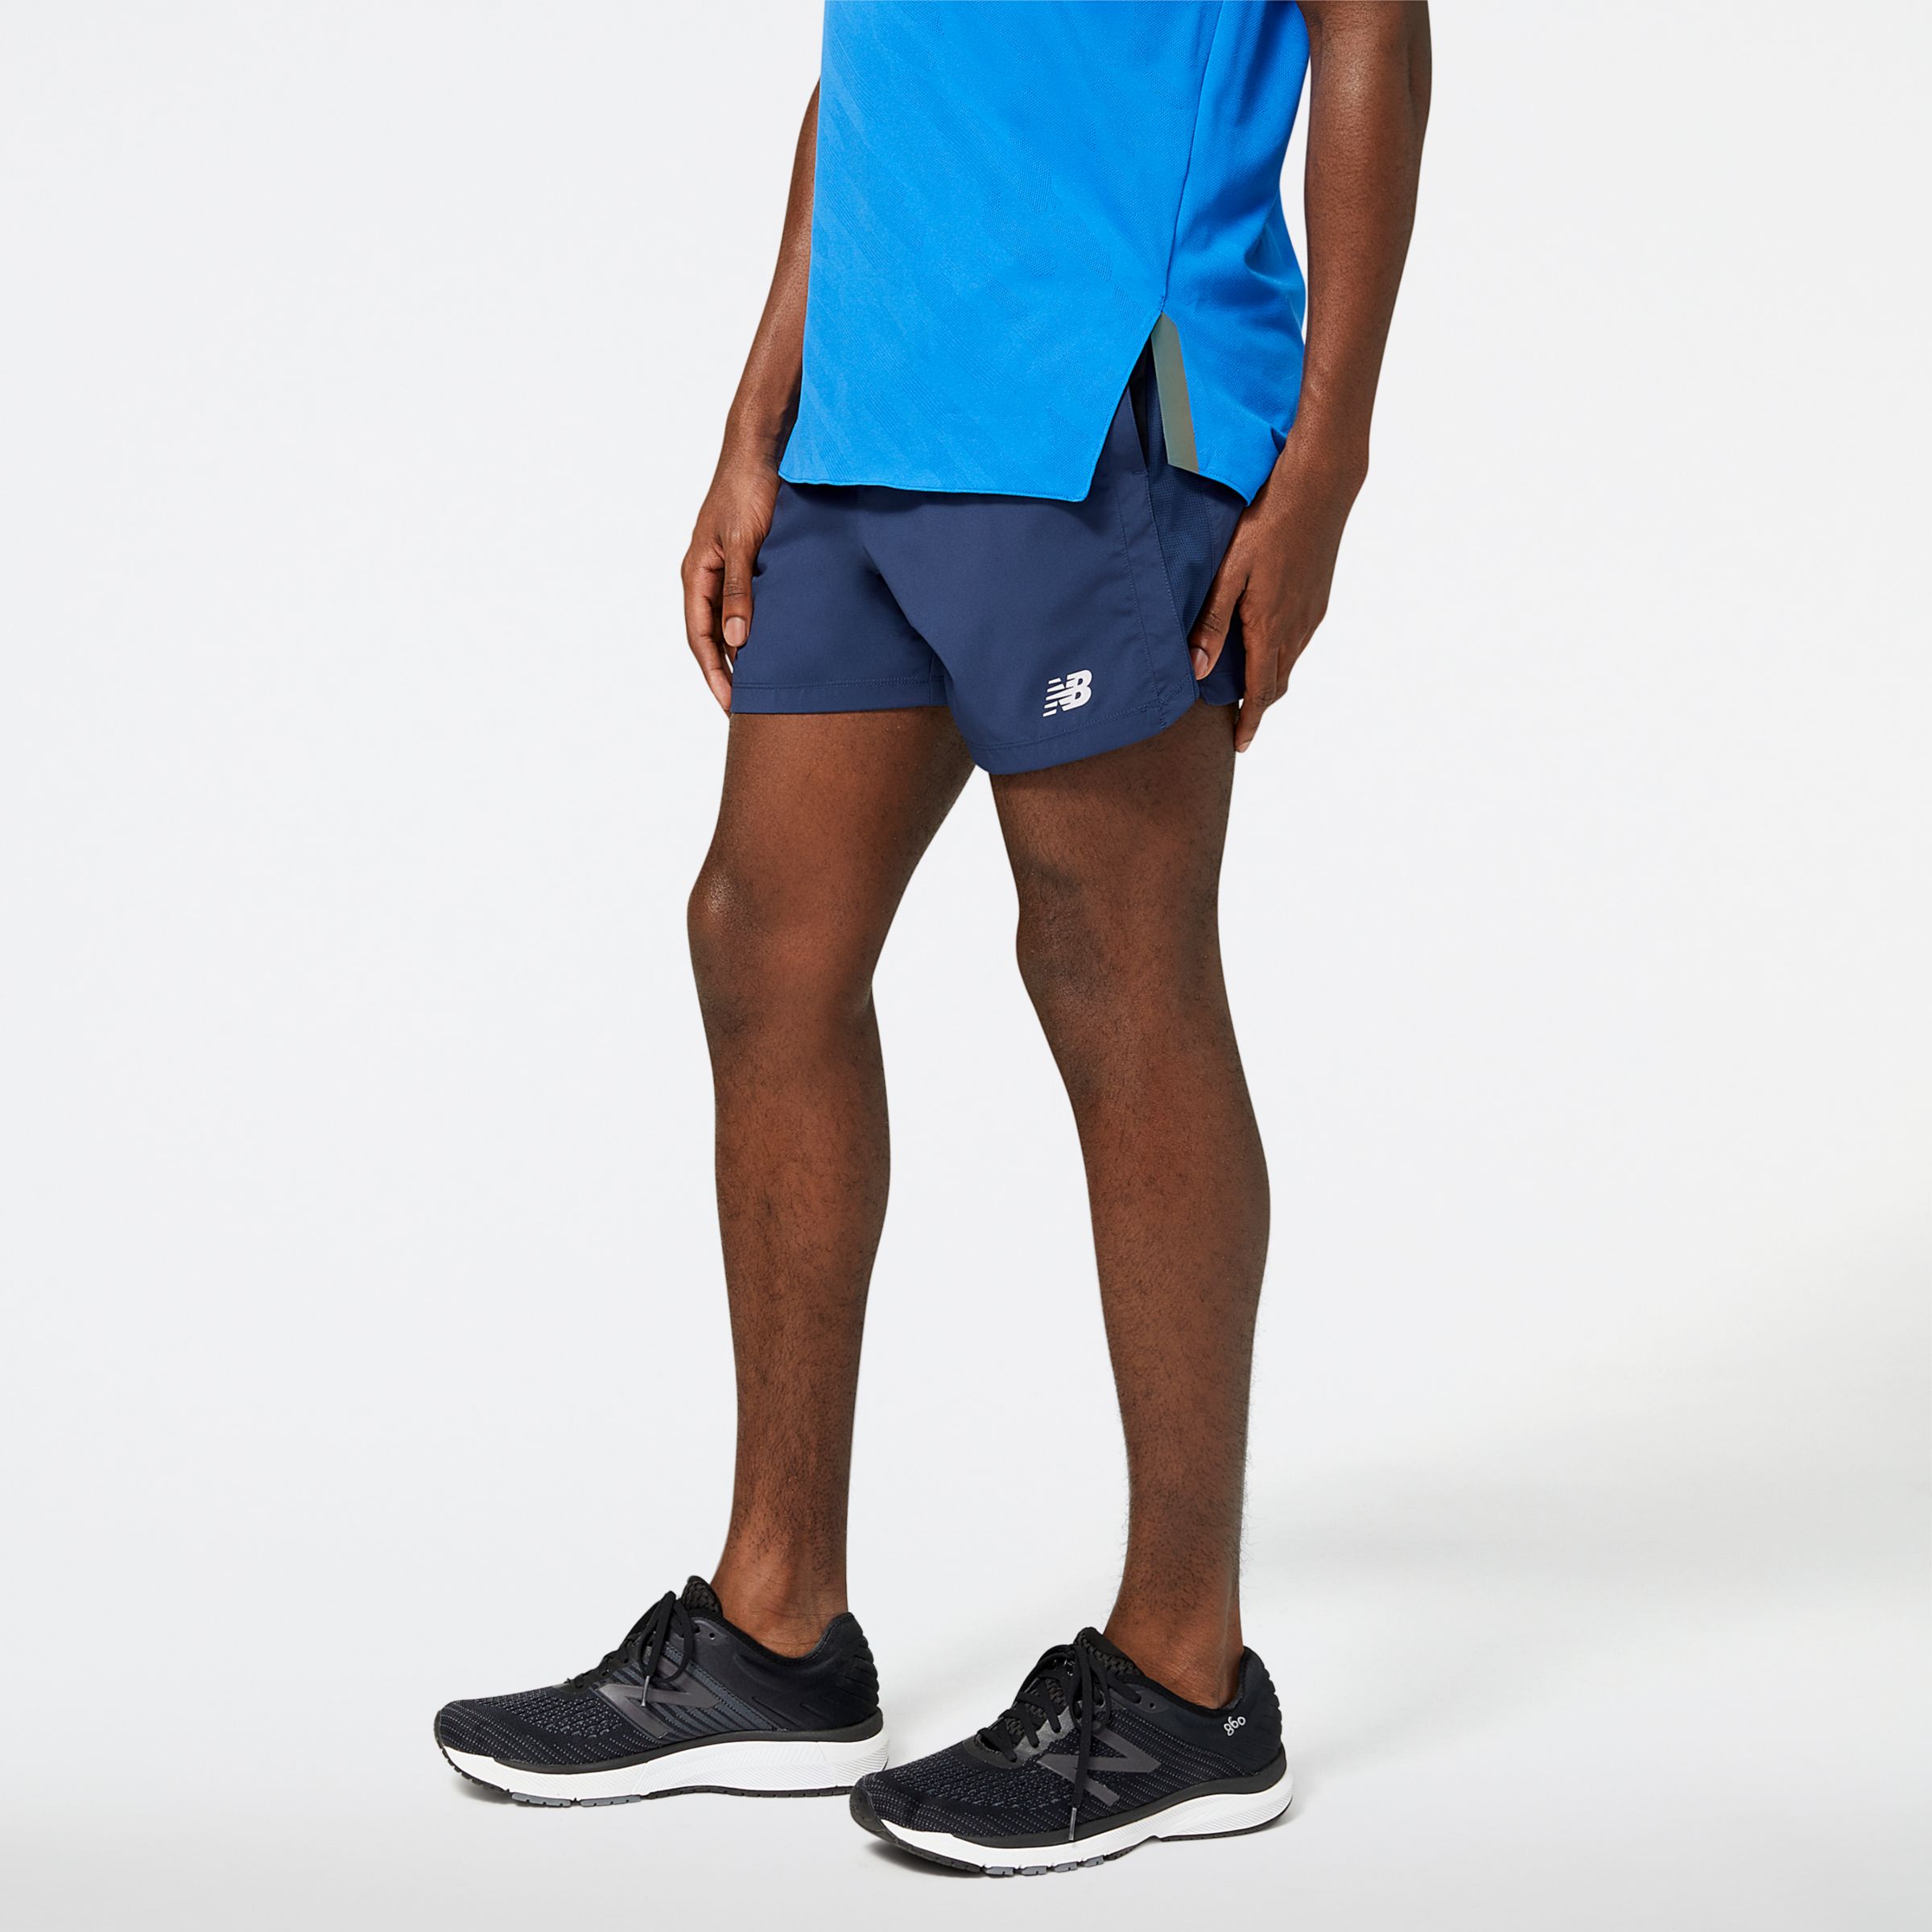 New Balance Accelerate 5 Inch Short Men's Shorts Sport | eBay